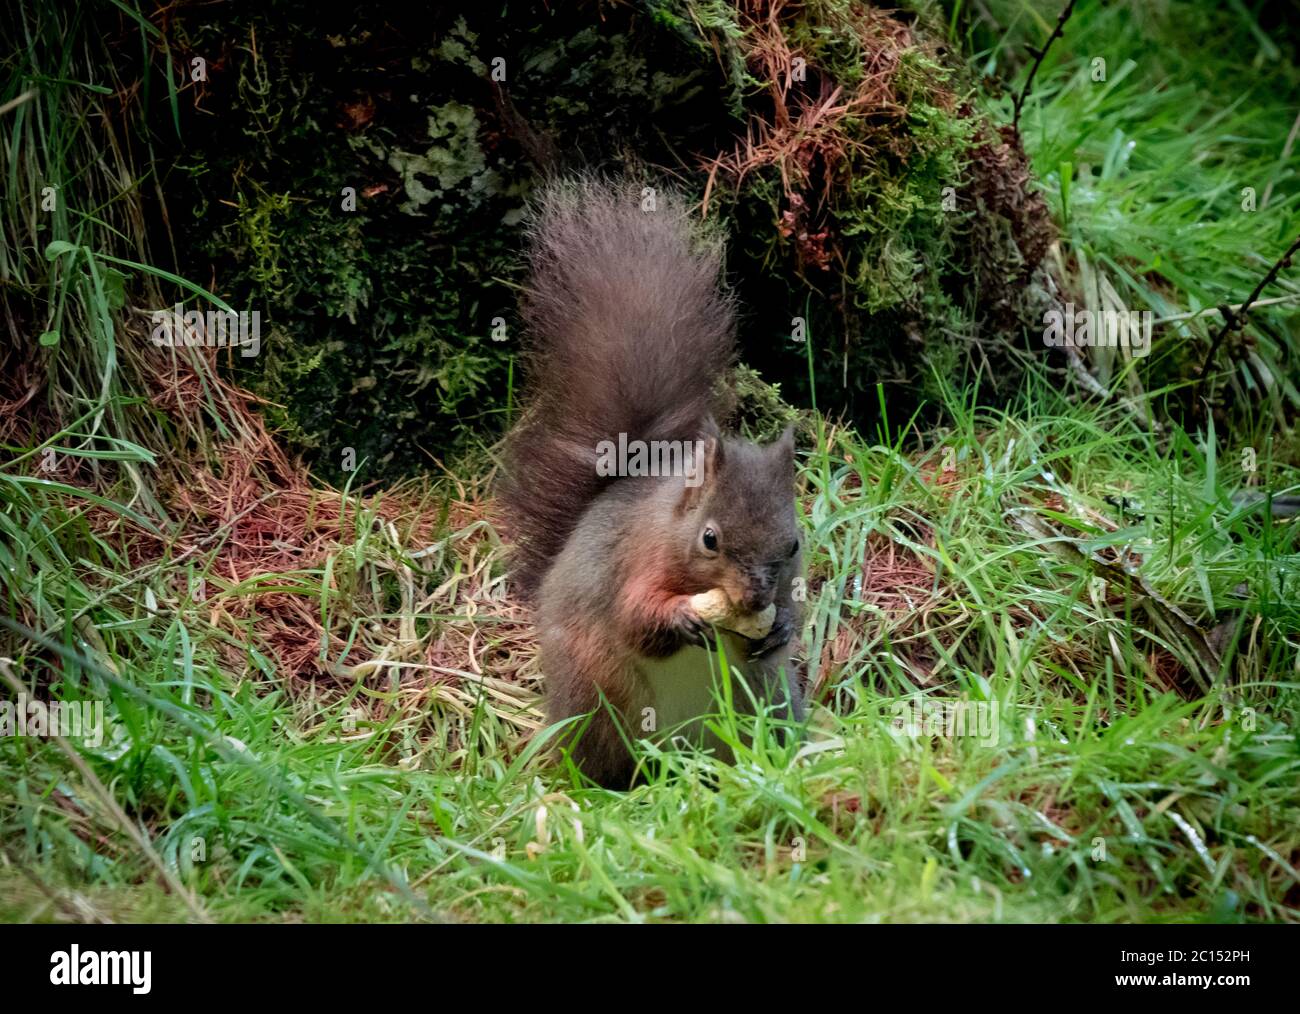 Squirrel with Peanut Stock Photo